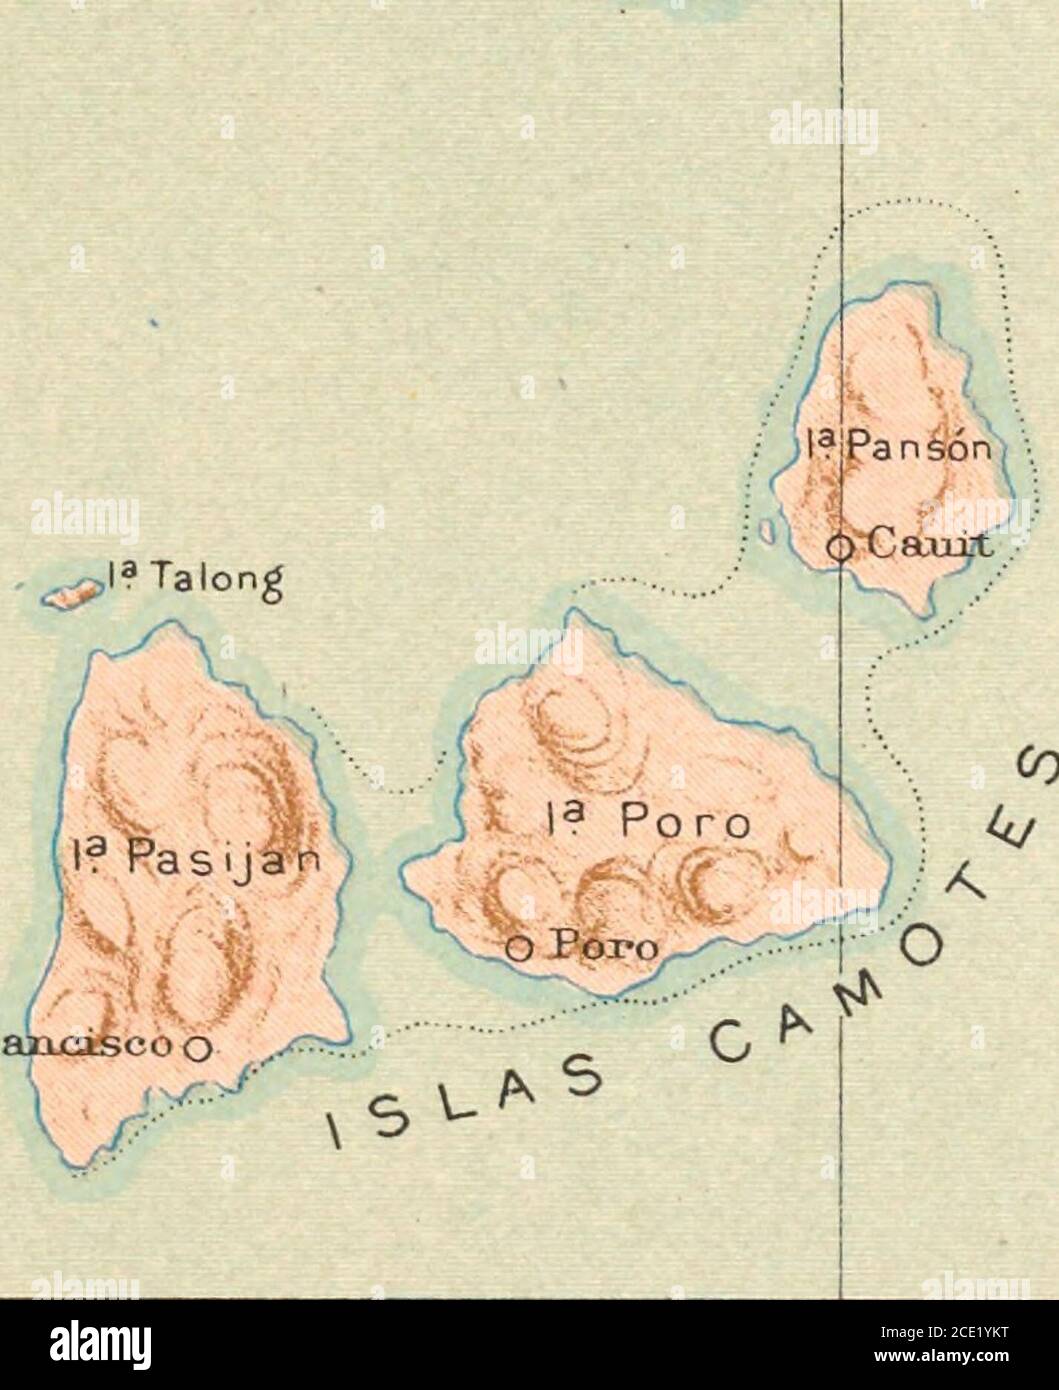 . Atlas of the Philippine Islands . M.Tut ^ ^^í o.ruUra SuidáTu/^ /Y/7^OTí pta Baglit CJararntan M.Tagbás OAlhiier-a ^ f^^agLitagan ^^; ,i&gt;^ (il.Marabao ,, y.. ,-,,,) M.Palanas M.Guindal; M.TIIas3 ya S -AuffiíStirt- oTahoMjig c M.Calarabayan lamina M.Lunas p) • ,/, p M.Tabaang I-- o,.. t  M.BanutoM.Bató M.Pongon BUo .  TíJñániai-aTiat E.JSixLVaTMcLva: NM9 So yLdffurta. GioTLtcLgb M M.MayanfiaBavbay 1^ M,Hi SejyaJibiinan I , P^= Tagbuc Pta Salacot o O* WcertZj? P^Catarman,S.IsíJj-o (? Pta Bitanjuán A- ? M.Manloy M.MabagonM.Hodlongón M.Cansara man ISLA DE SAMAR K 9o e ,^ .:.^^*:^itei¥«S«^^ Stock Photo